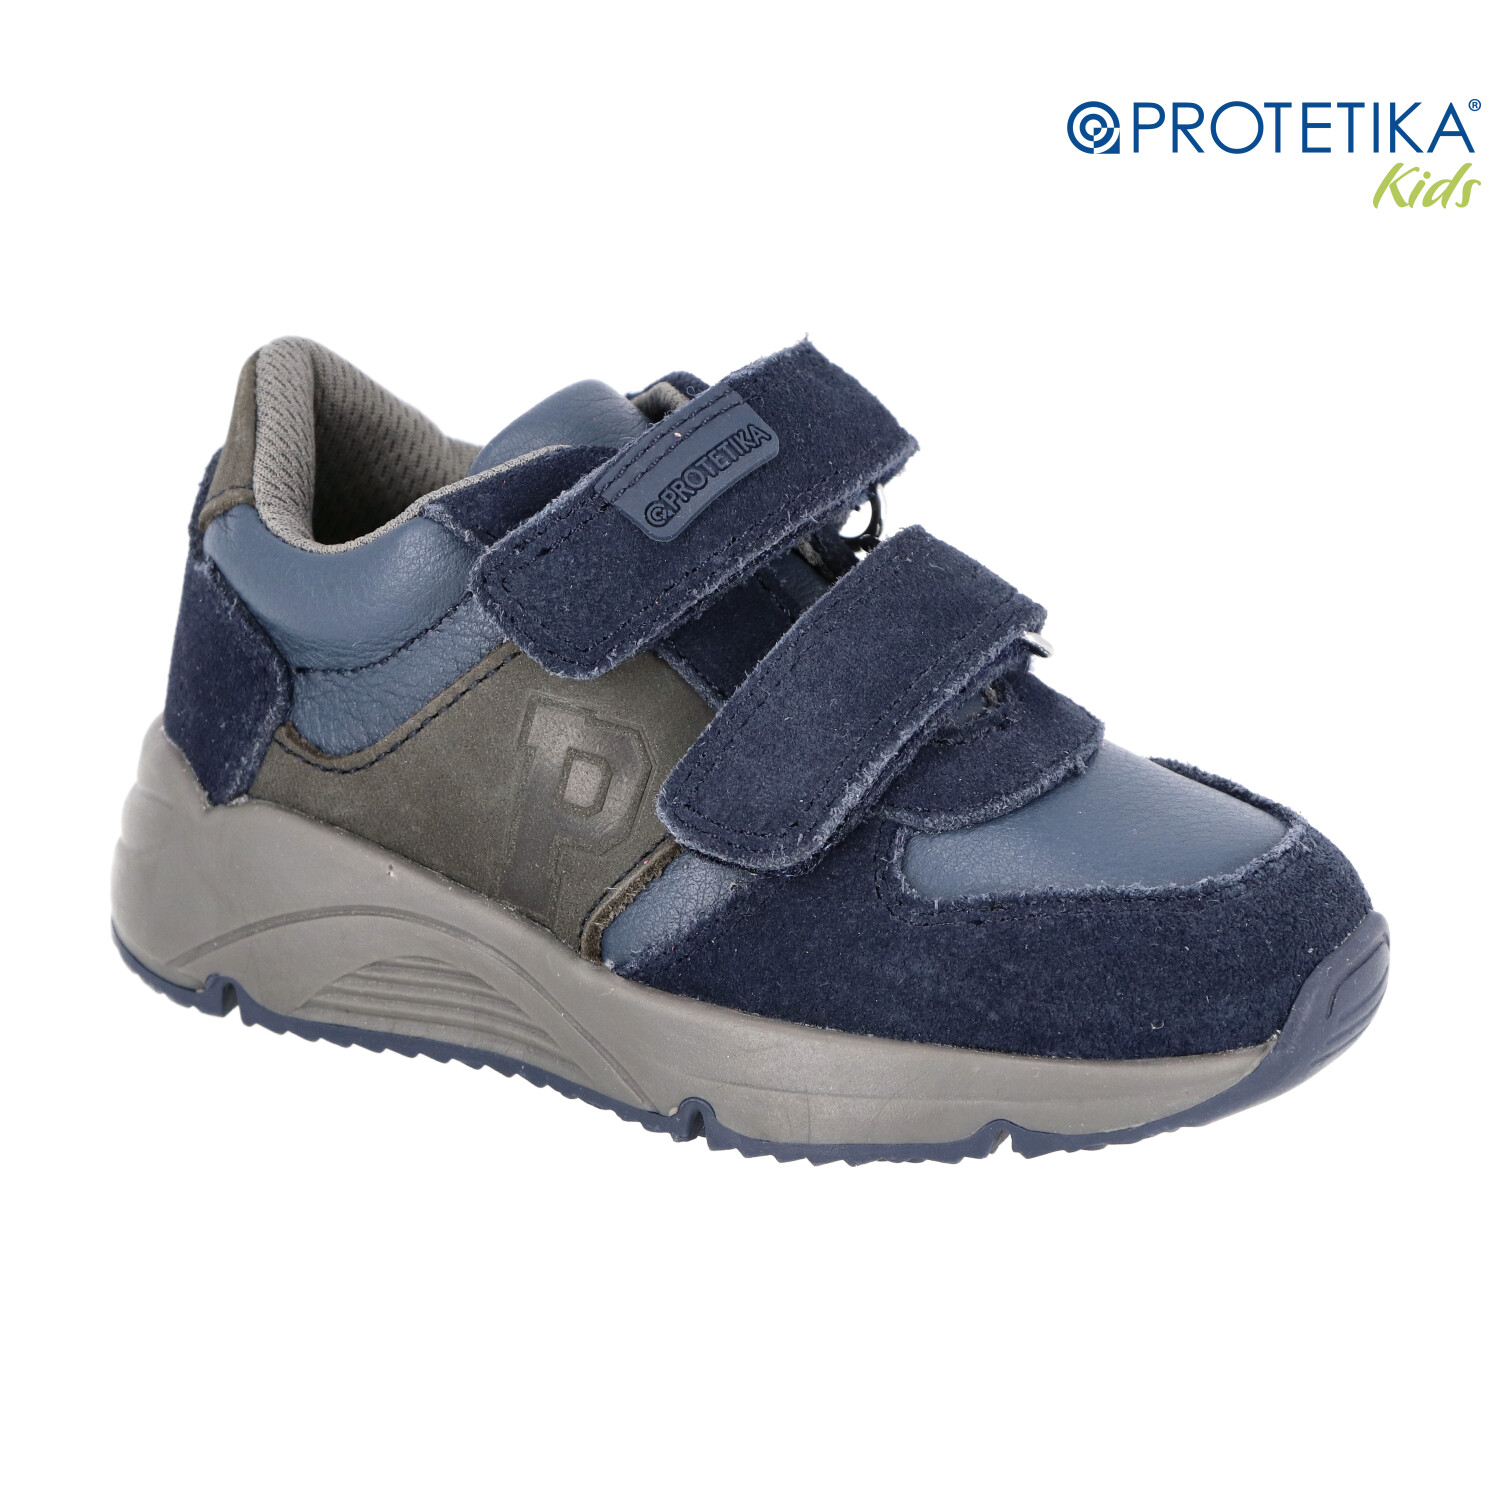 Protetika - topánky RONAN grey